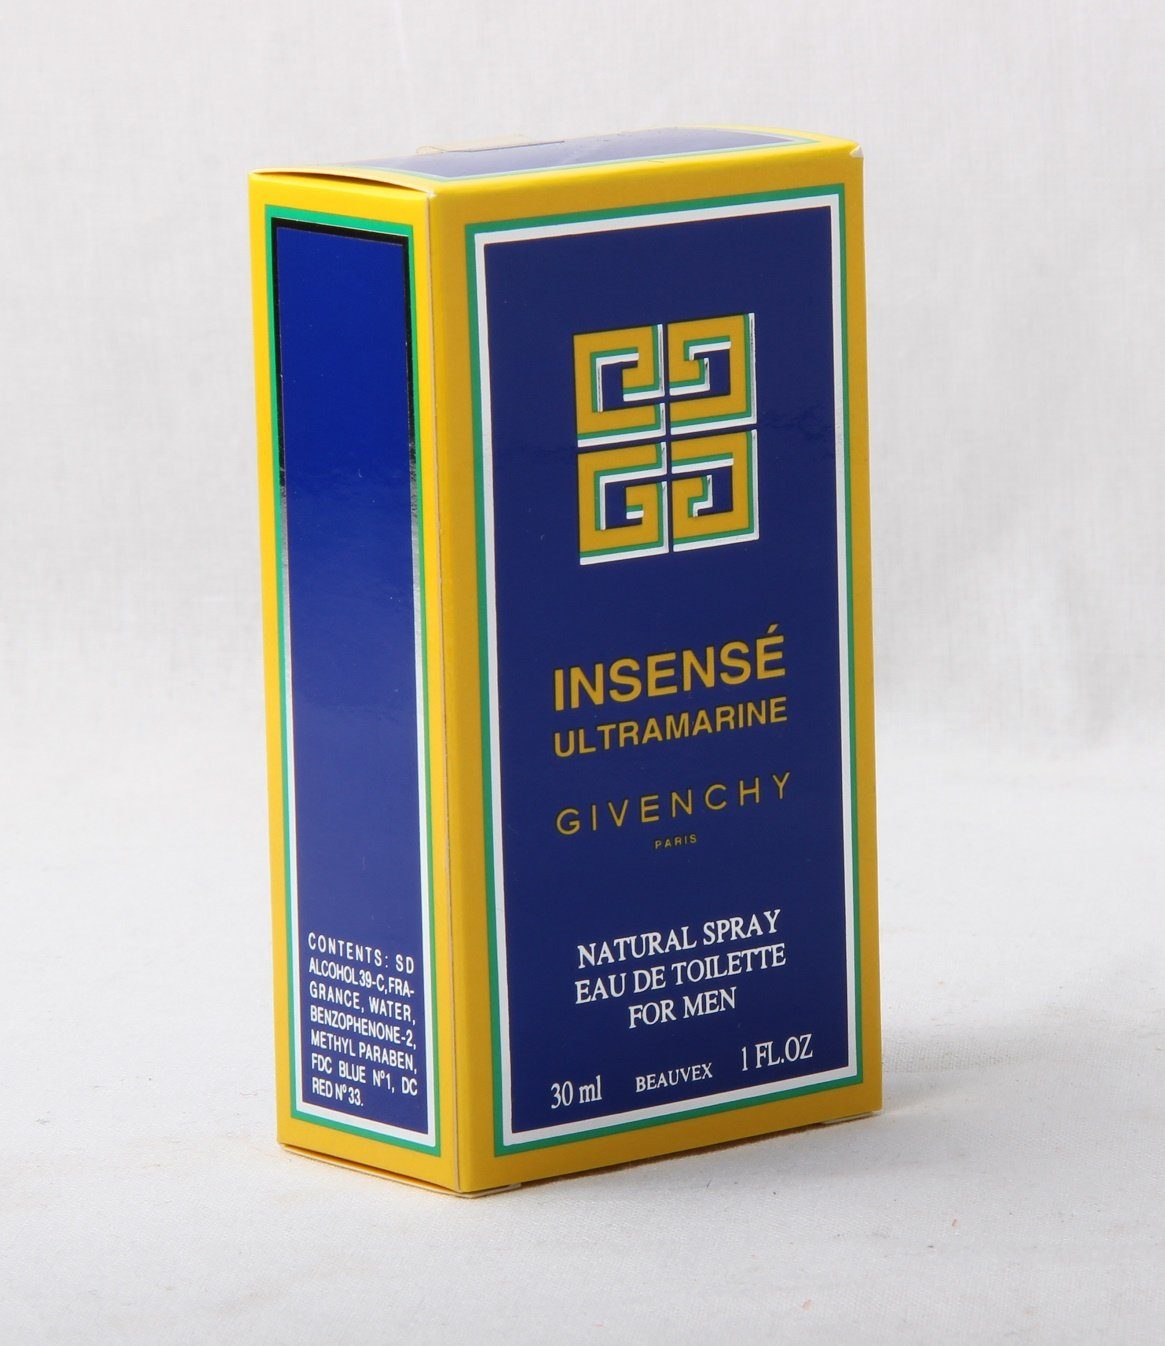 GIVENCHY Eau de spray Insense 30ml Ultramarine Givenchy Eau de Toilette Toilette